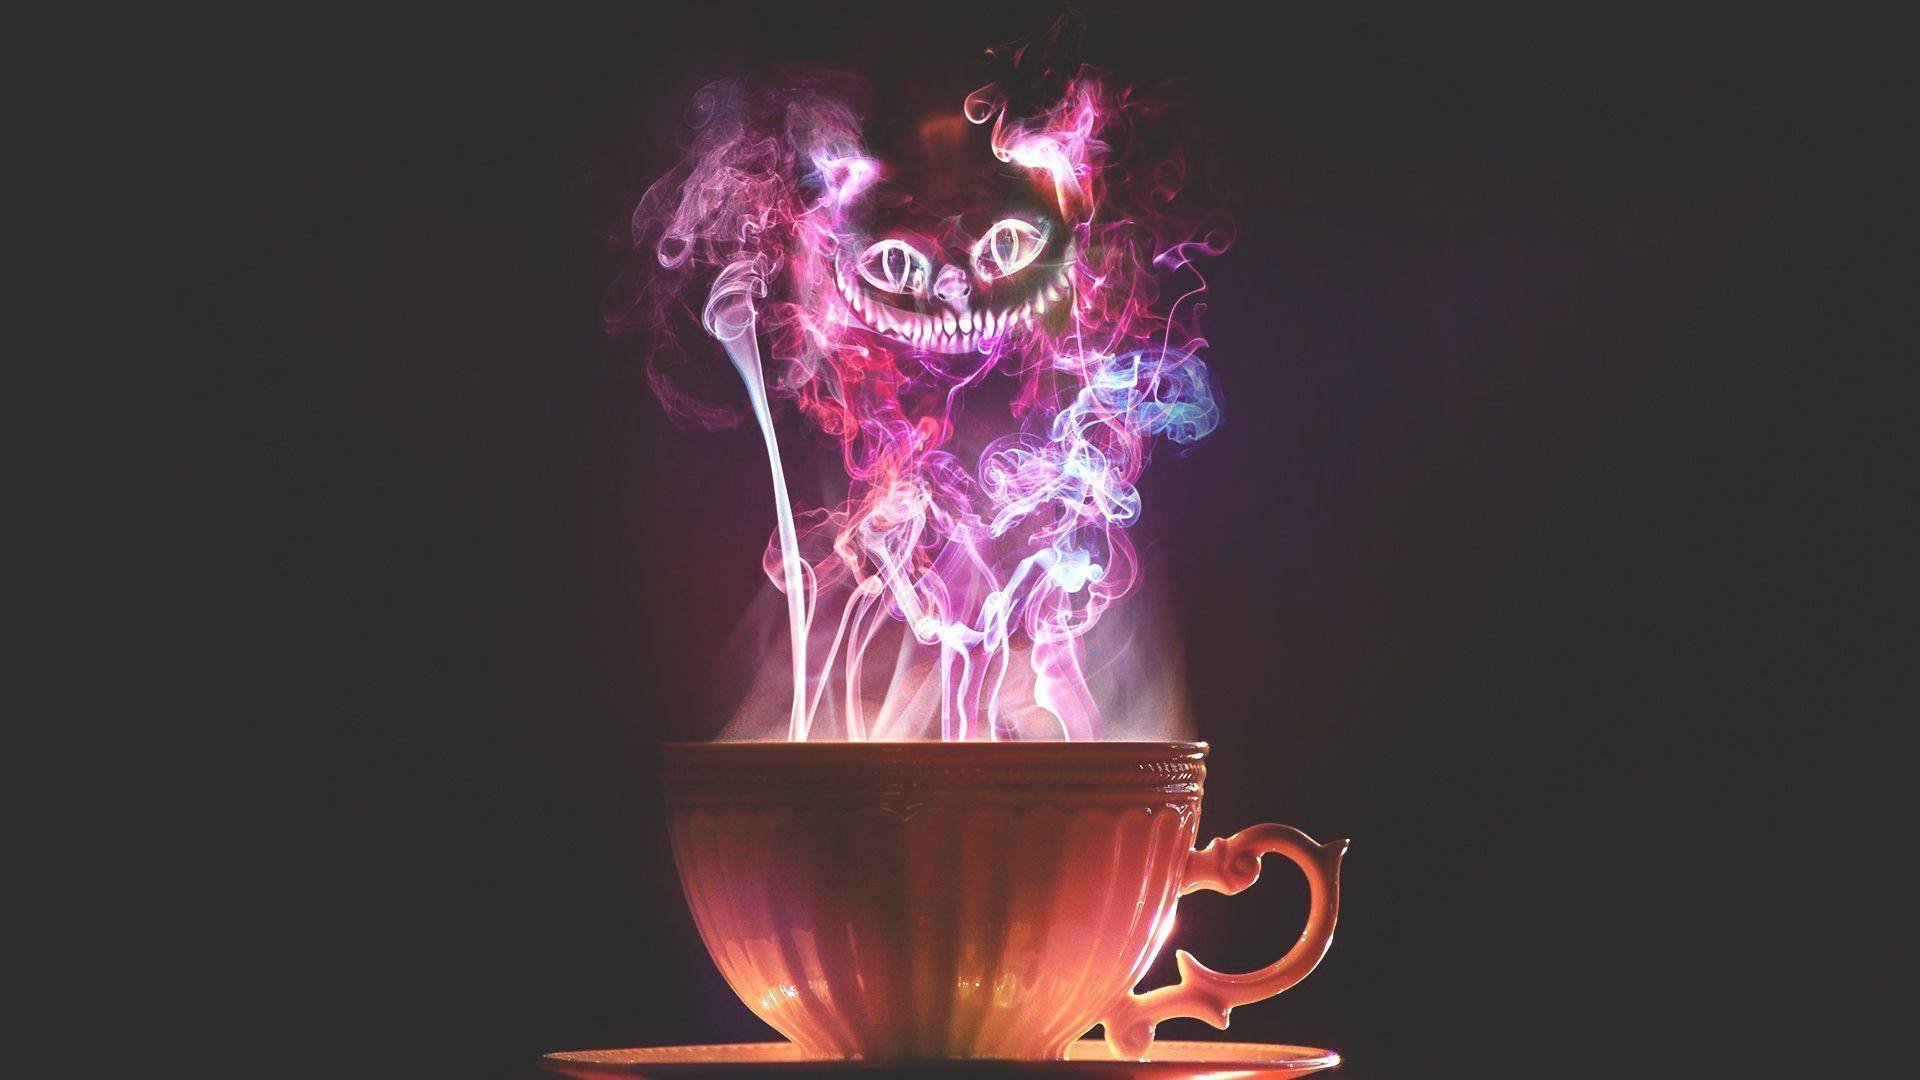 Amusing Wallpaper Cup Cheshire Cat Smoke Wallpaper 1920x1080PX